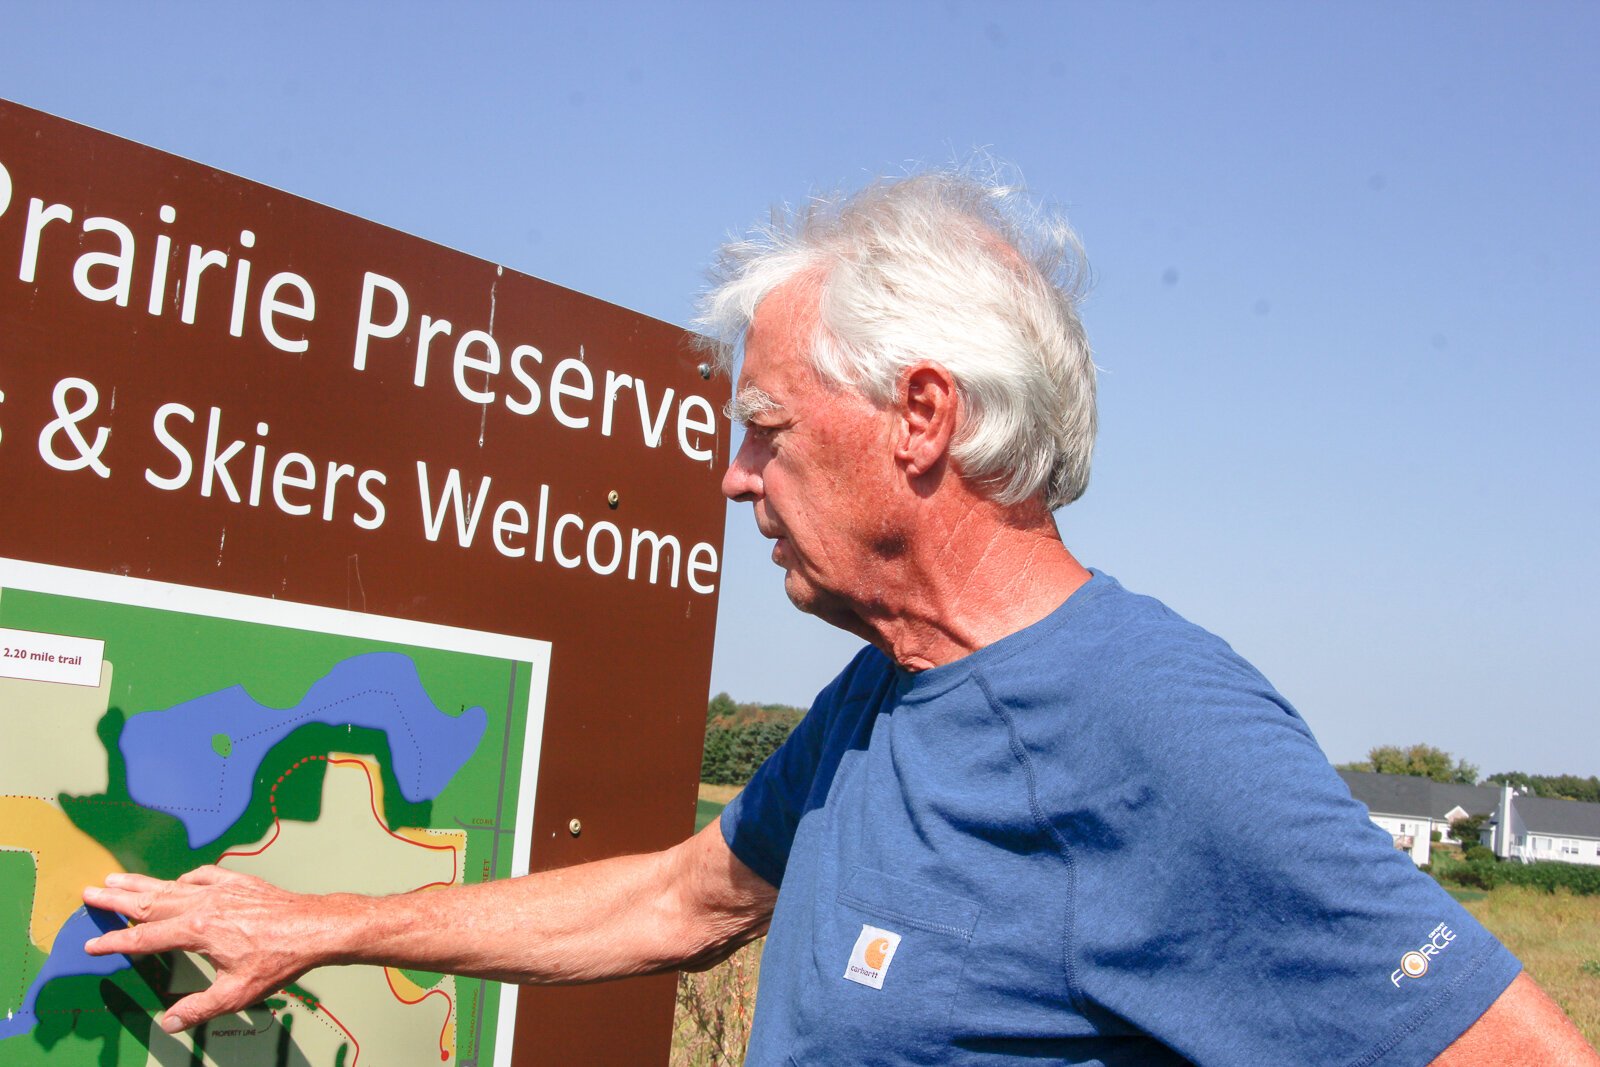 Robert Brinkerhoff spearheaded a 14-year effort to establish the 160 acre Gull Prairie Preserve in Richland.